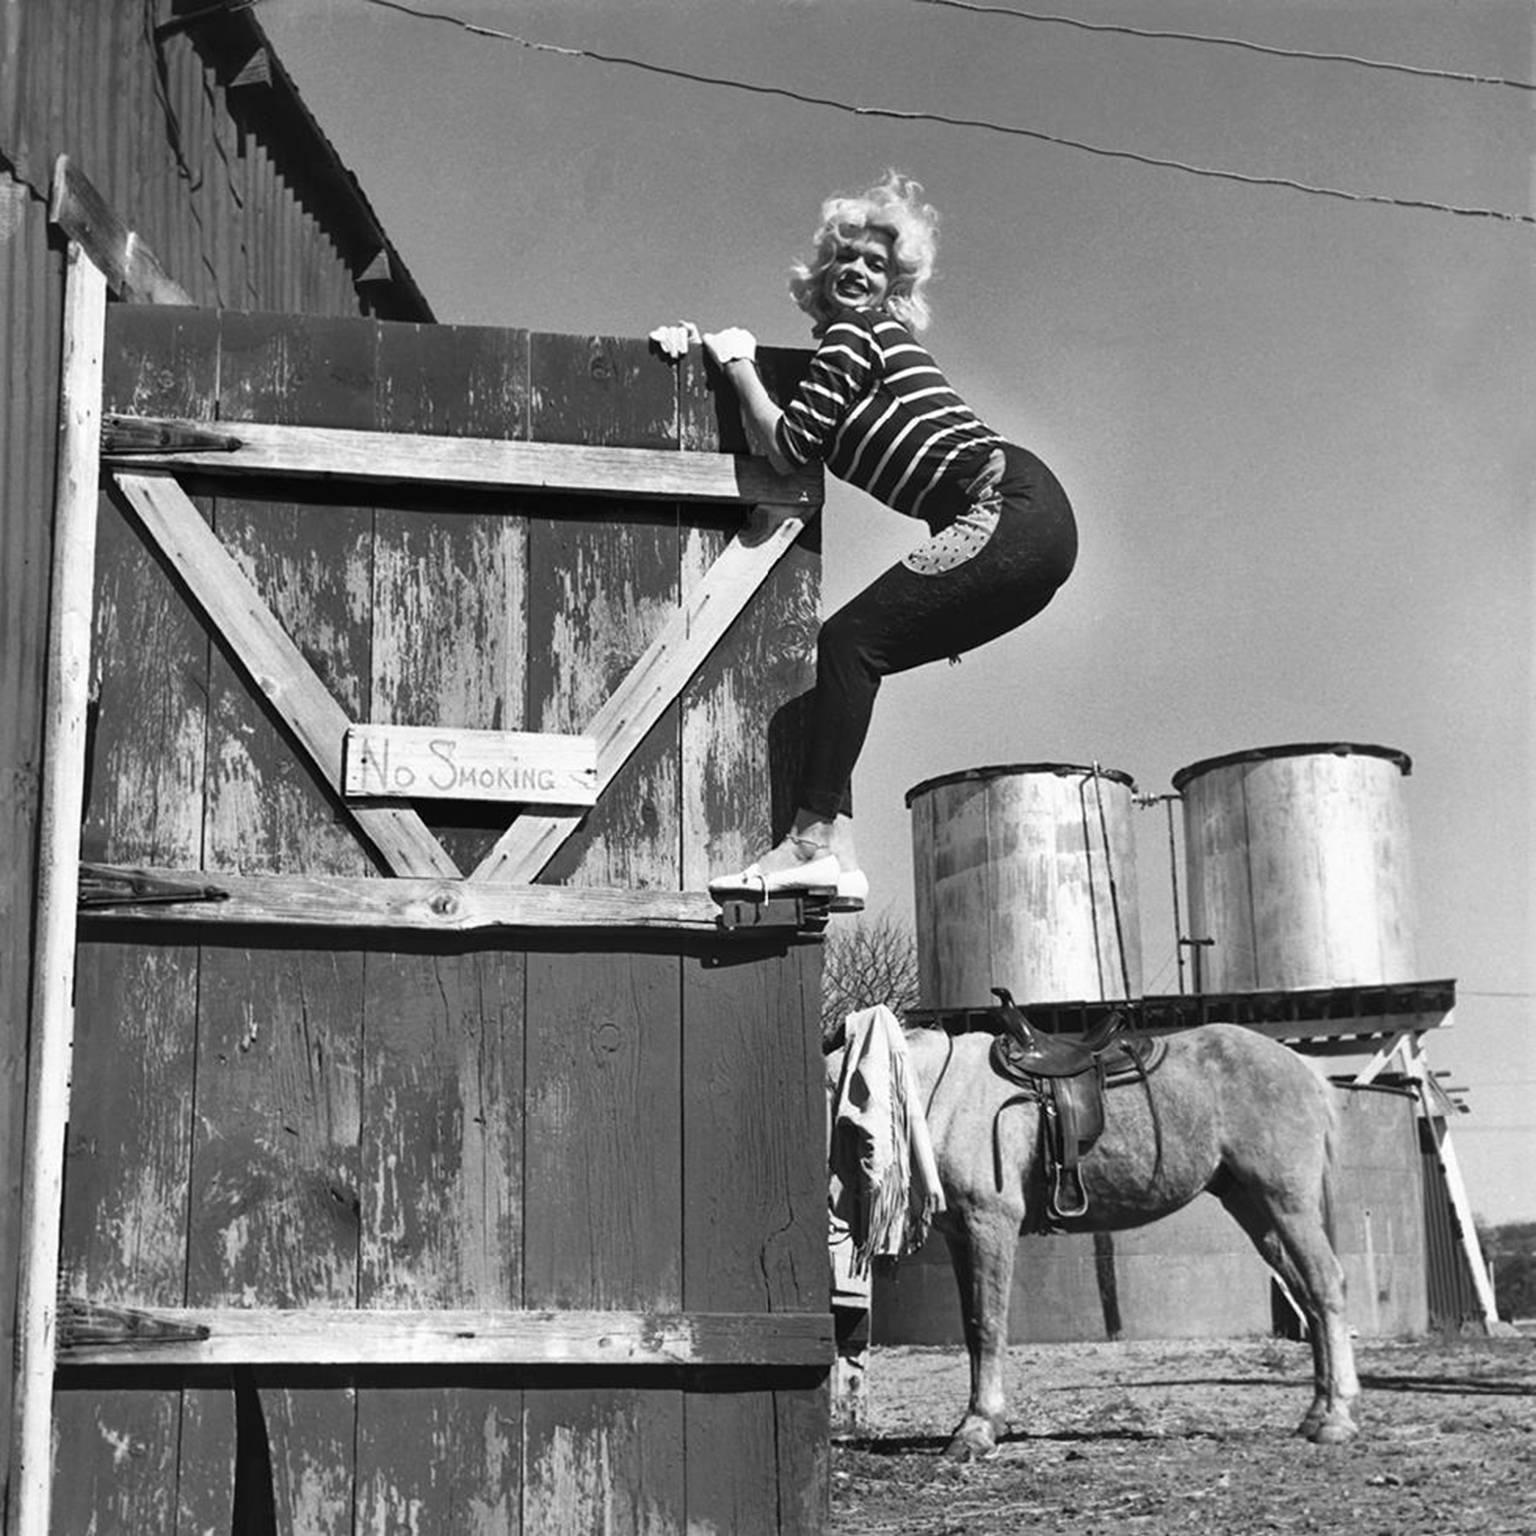 John R. Hamilton Black and White Photograph - Jayne Mansfield, climbing a barn, Los Angeles, CA 1960